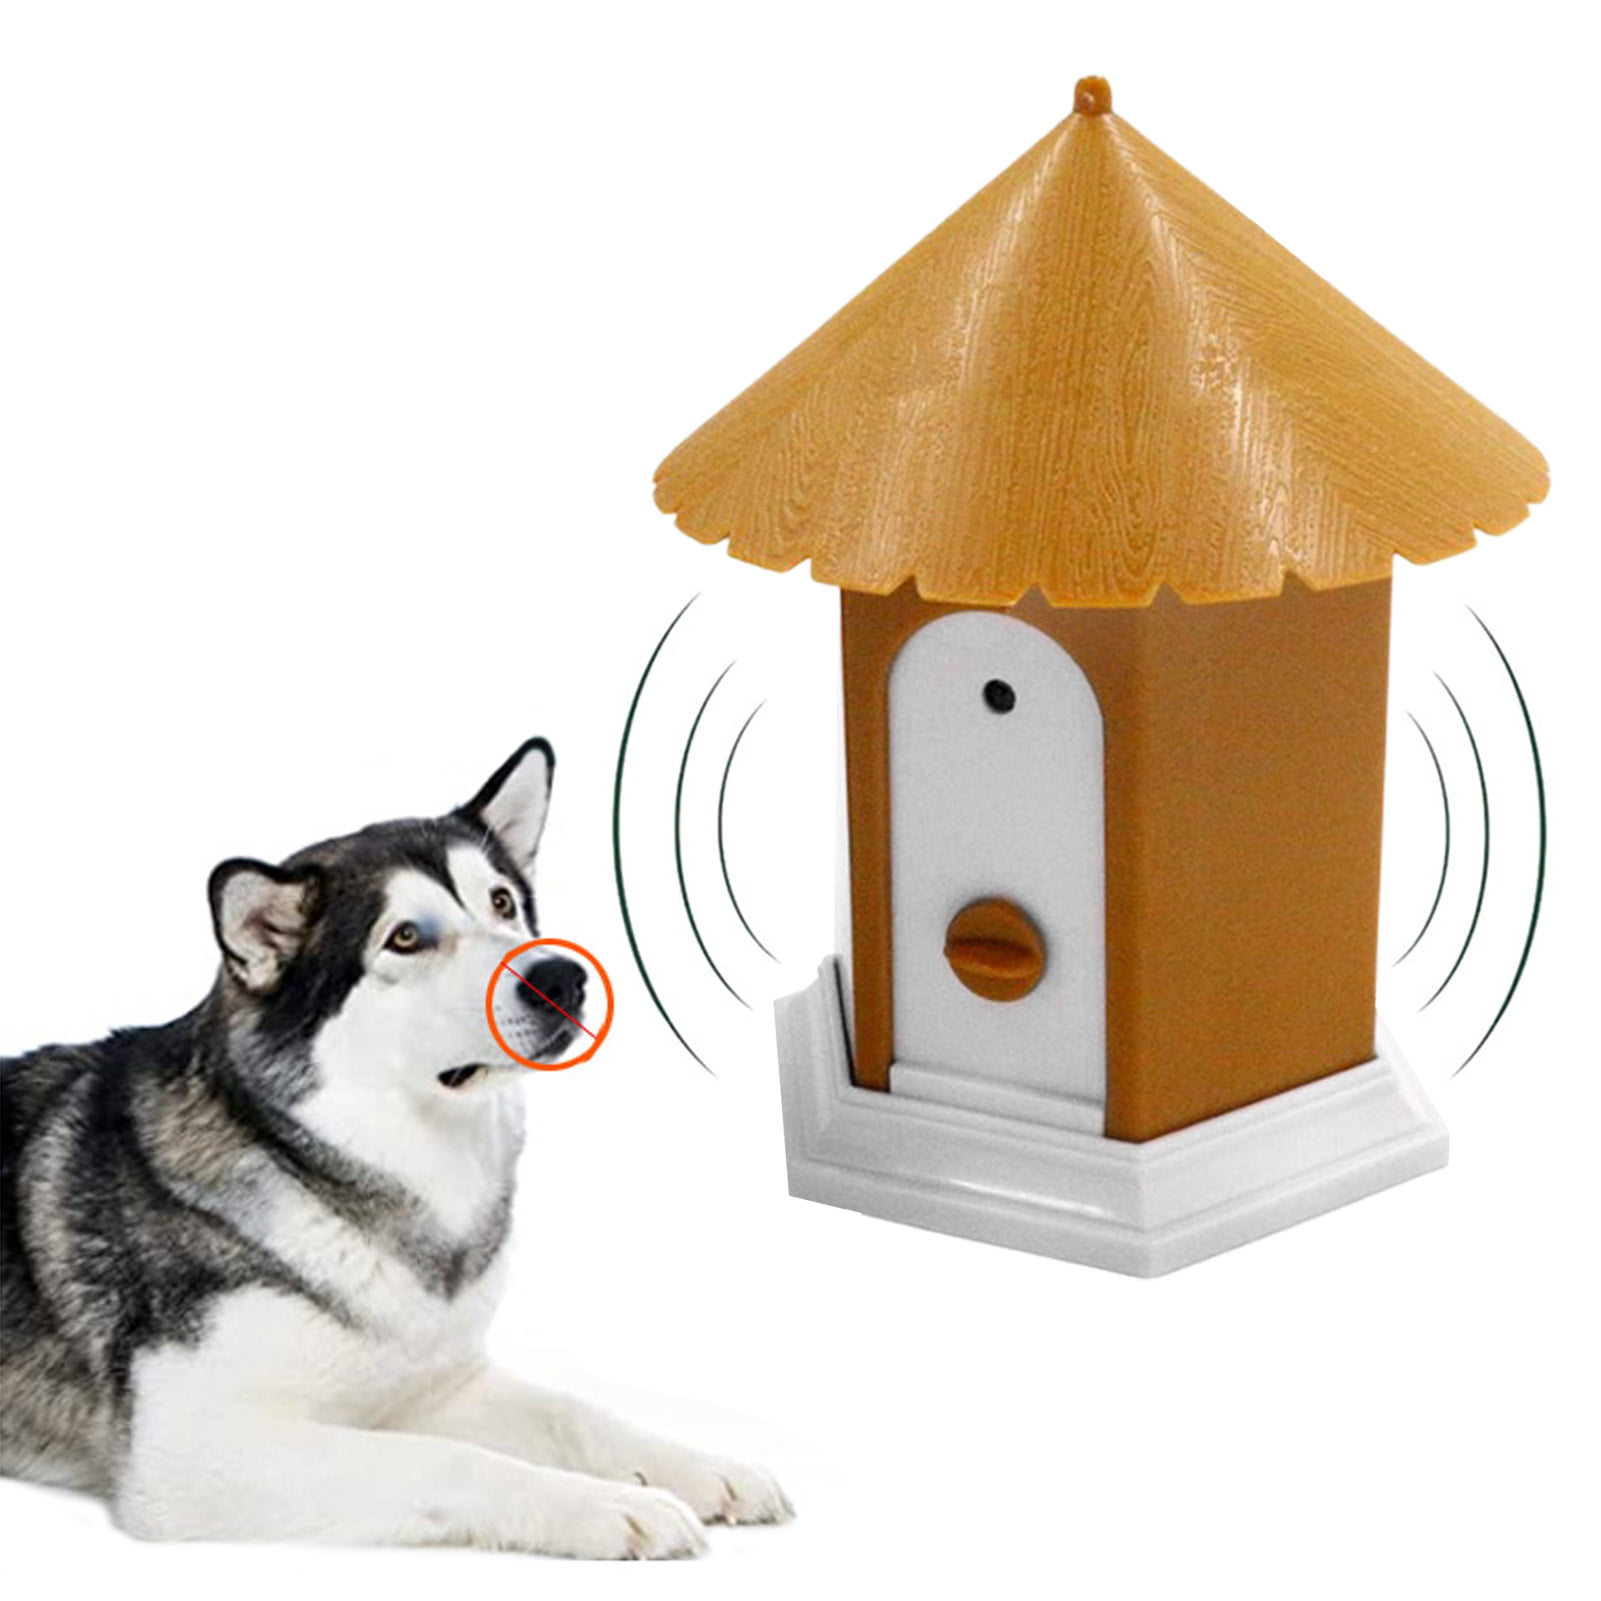 Ultrasonic Birdhouse BARK STOPPING DEVICE *Multiple Dogs 15m away Weatherproof 